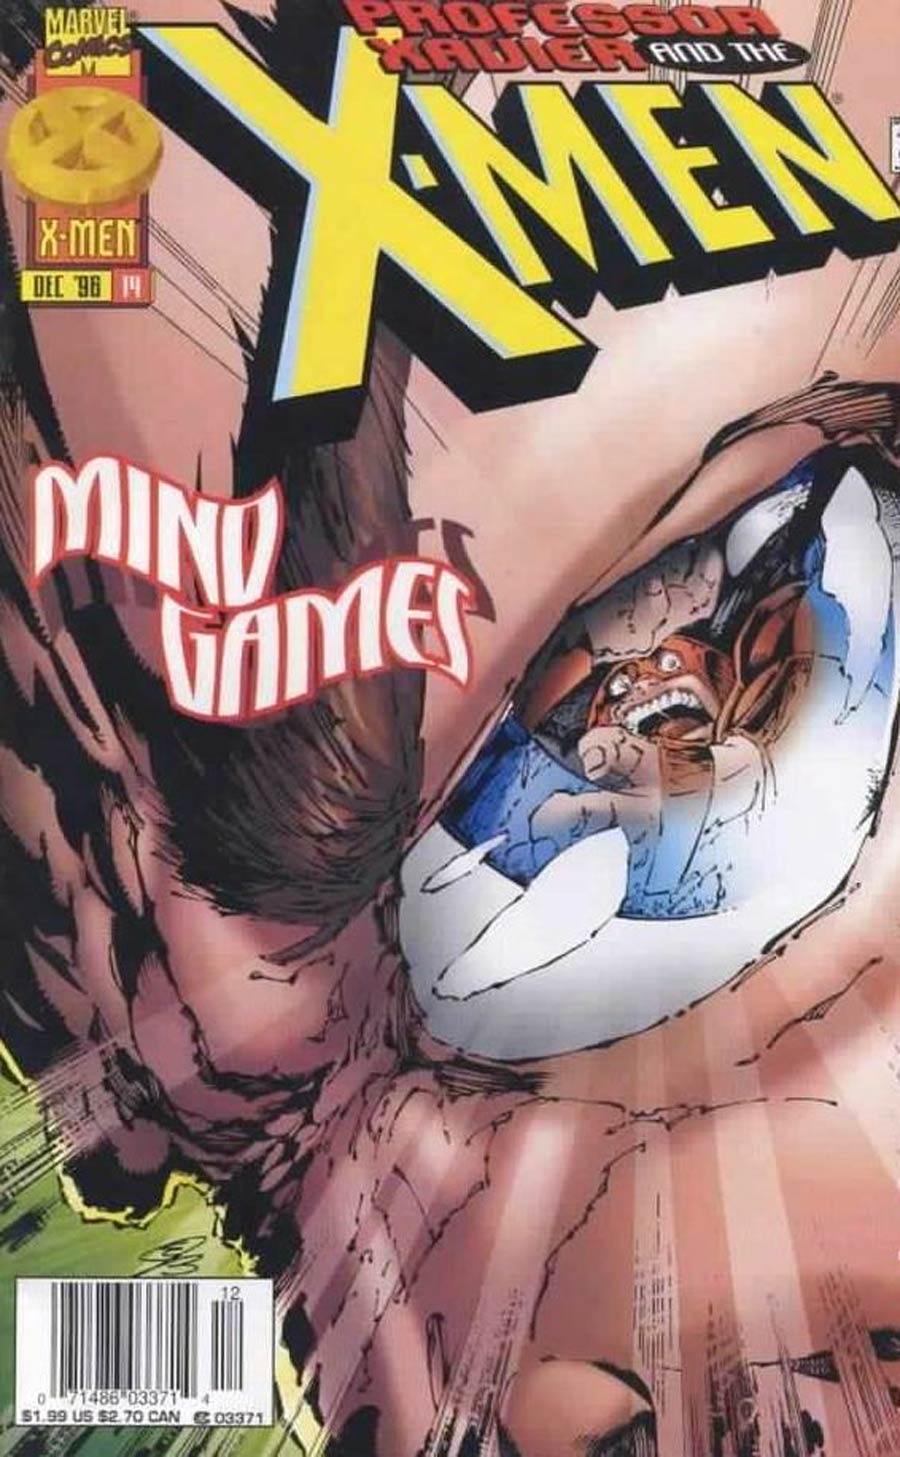 Professor Xavier And The X-Men #14 Cover B Flipbook